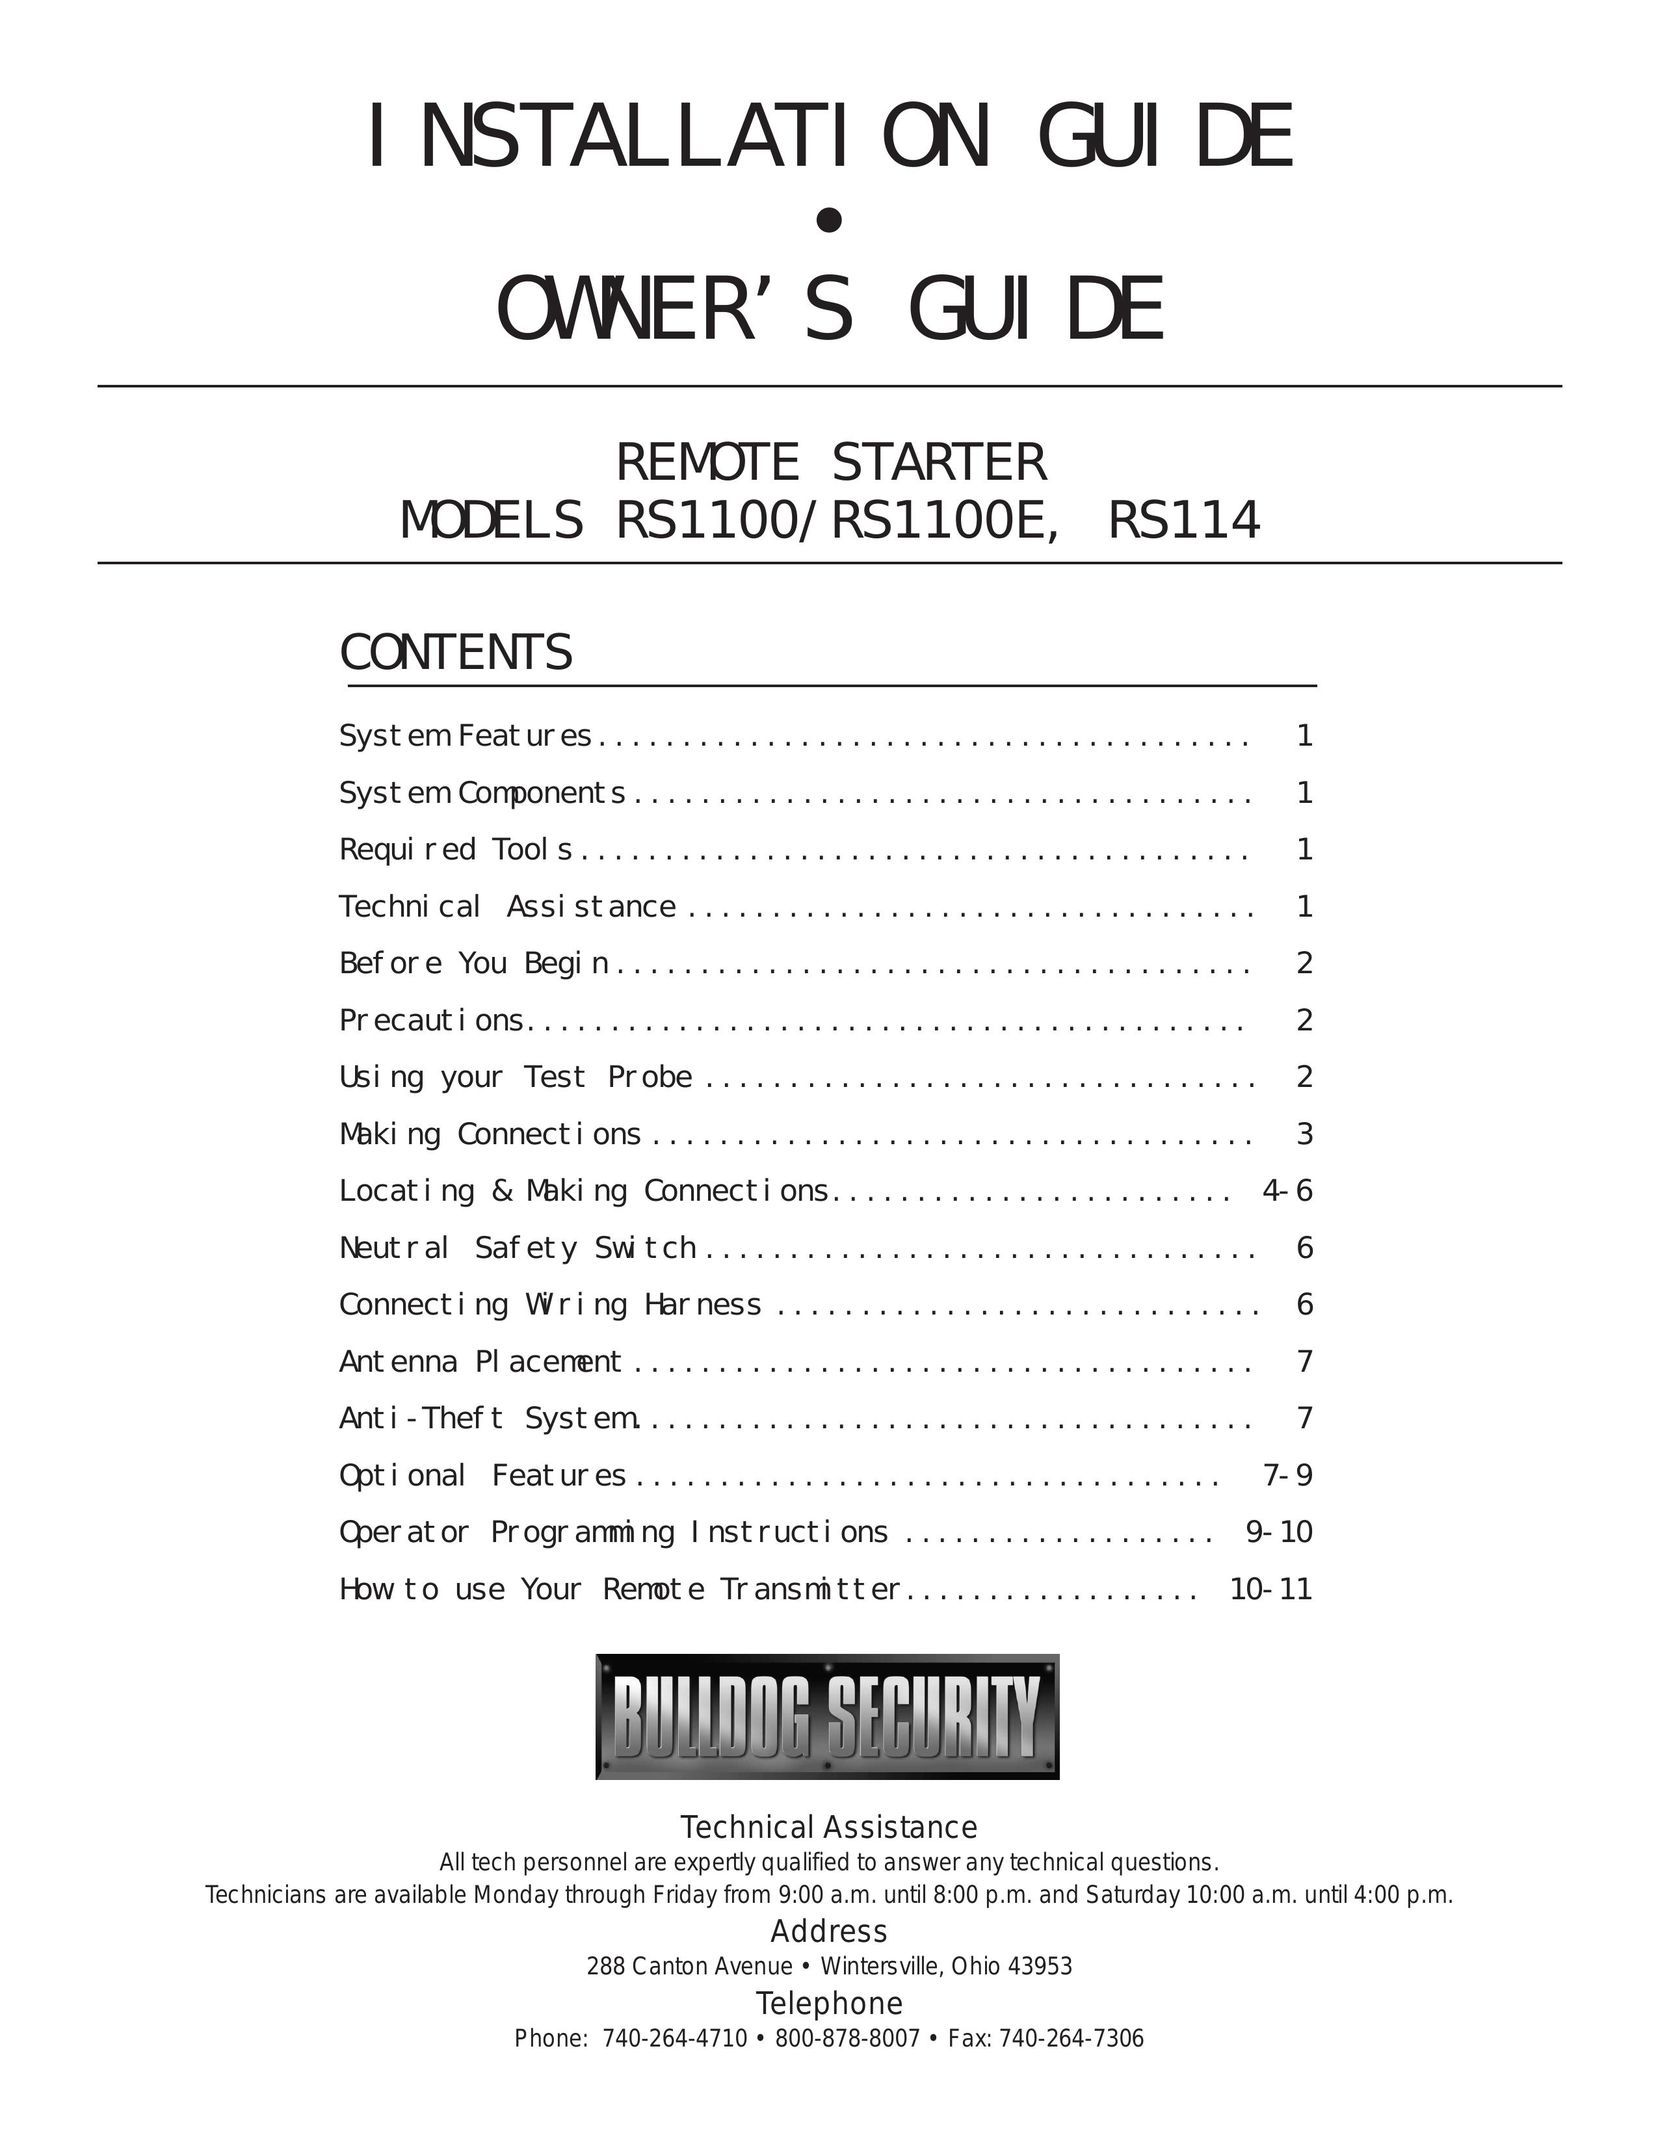 Bulldog Security RS1100 Universal Remote User Manual